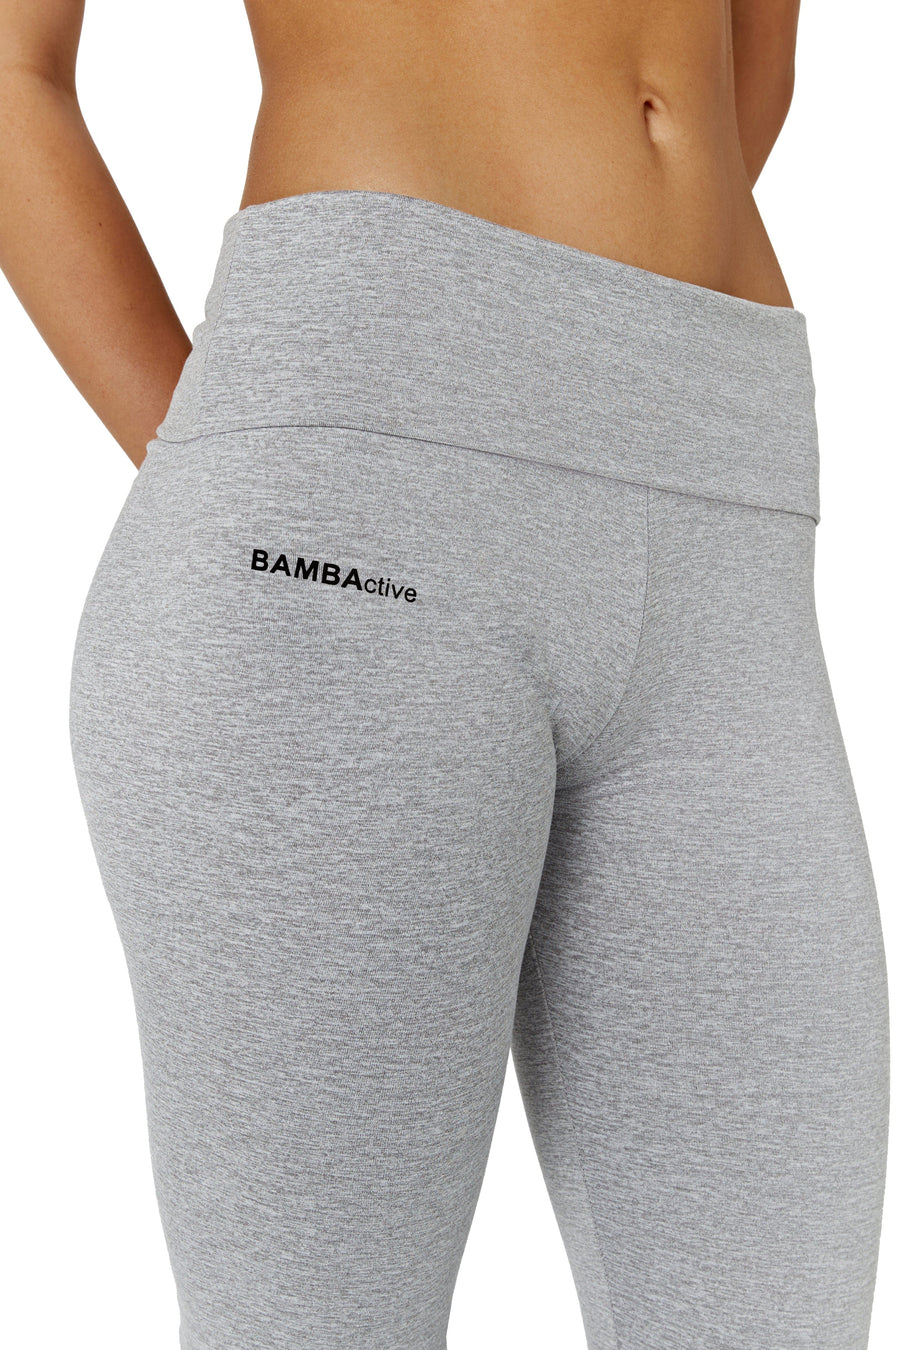 BAMBActive Pant - grey  -  CLOTHING  -  B Ā M B A S W I M